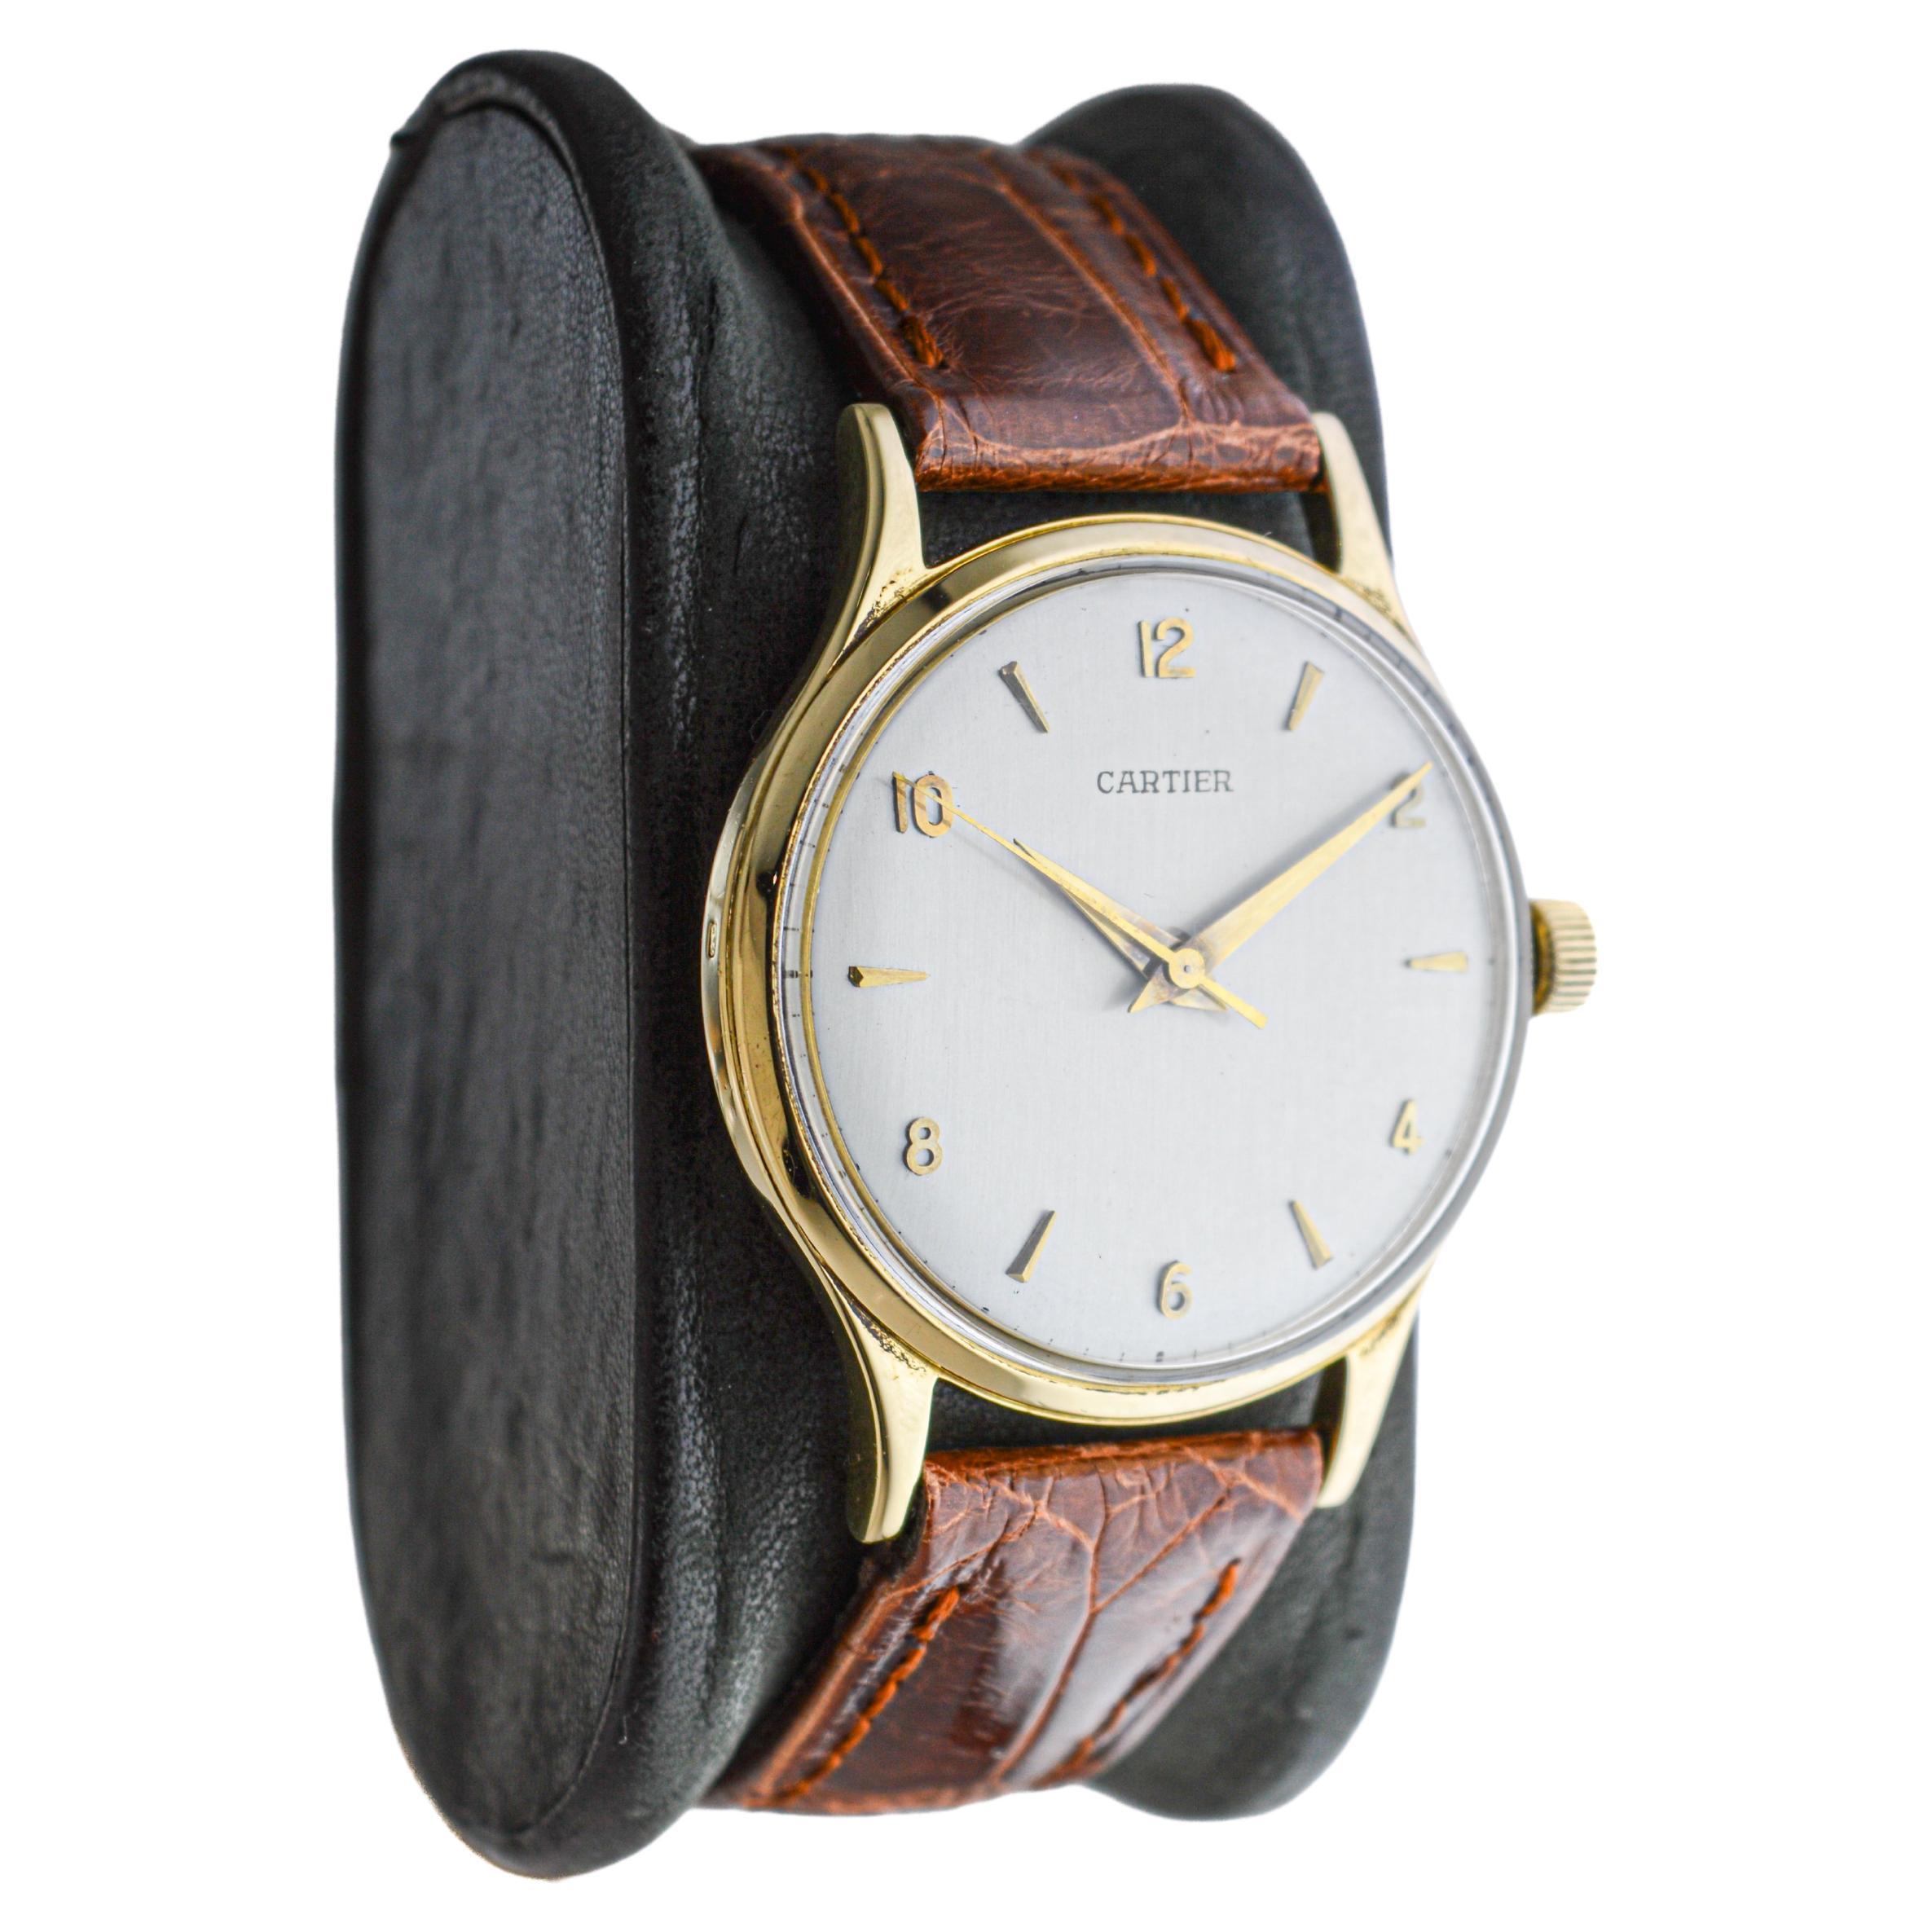 FACTORY / HOUSE: European Watch & Clock Co / Cartier Paris  
STYLE / REFERENCE: Calatrava Style 
METAL: 18Kt. Yellow Gold
CIRCA: 1950's
MOVEMENT / CALIBER: 17 Jewels / Sweep / European Watch & Clock Co. 
Caliber P800/C
DIAL / HANDS: Silvered Dial